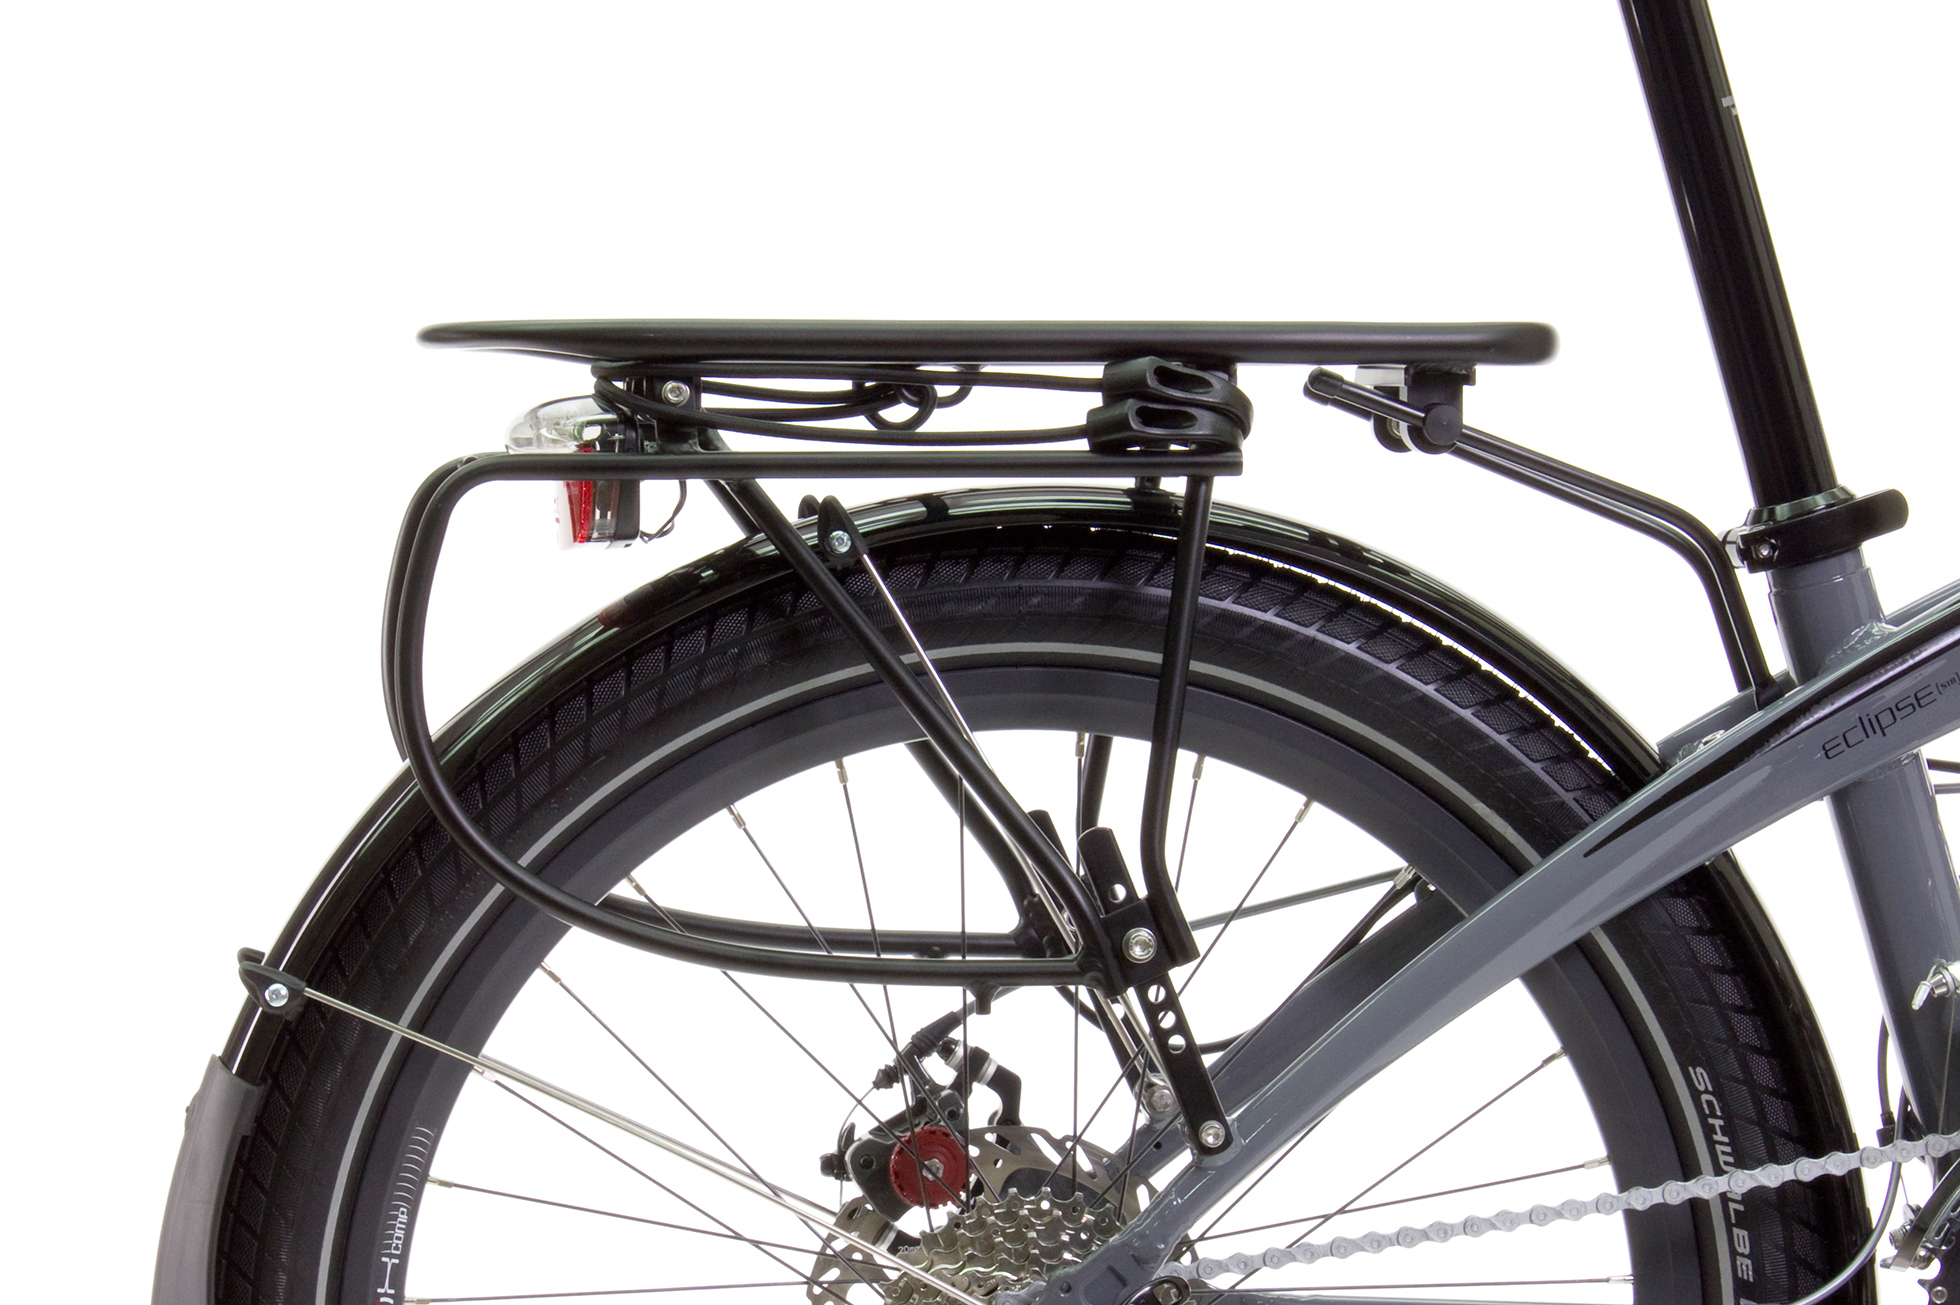 folding bike front rack